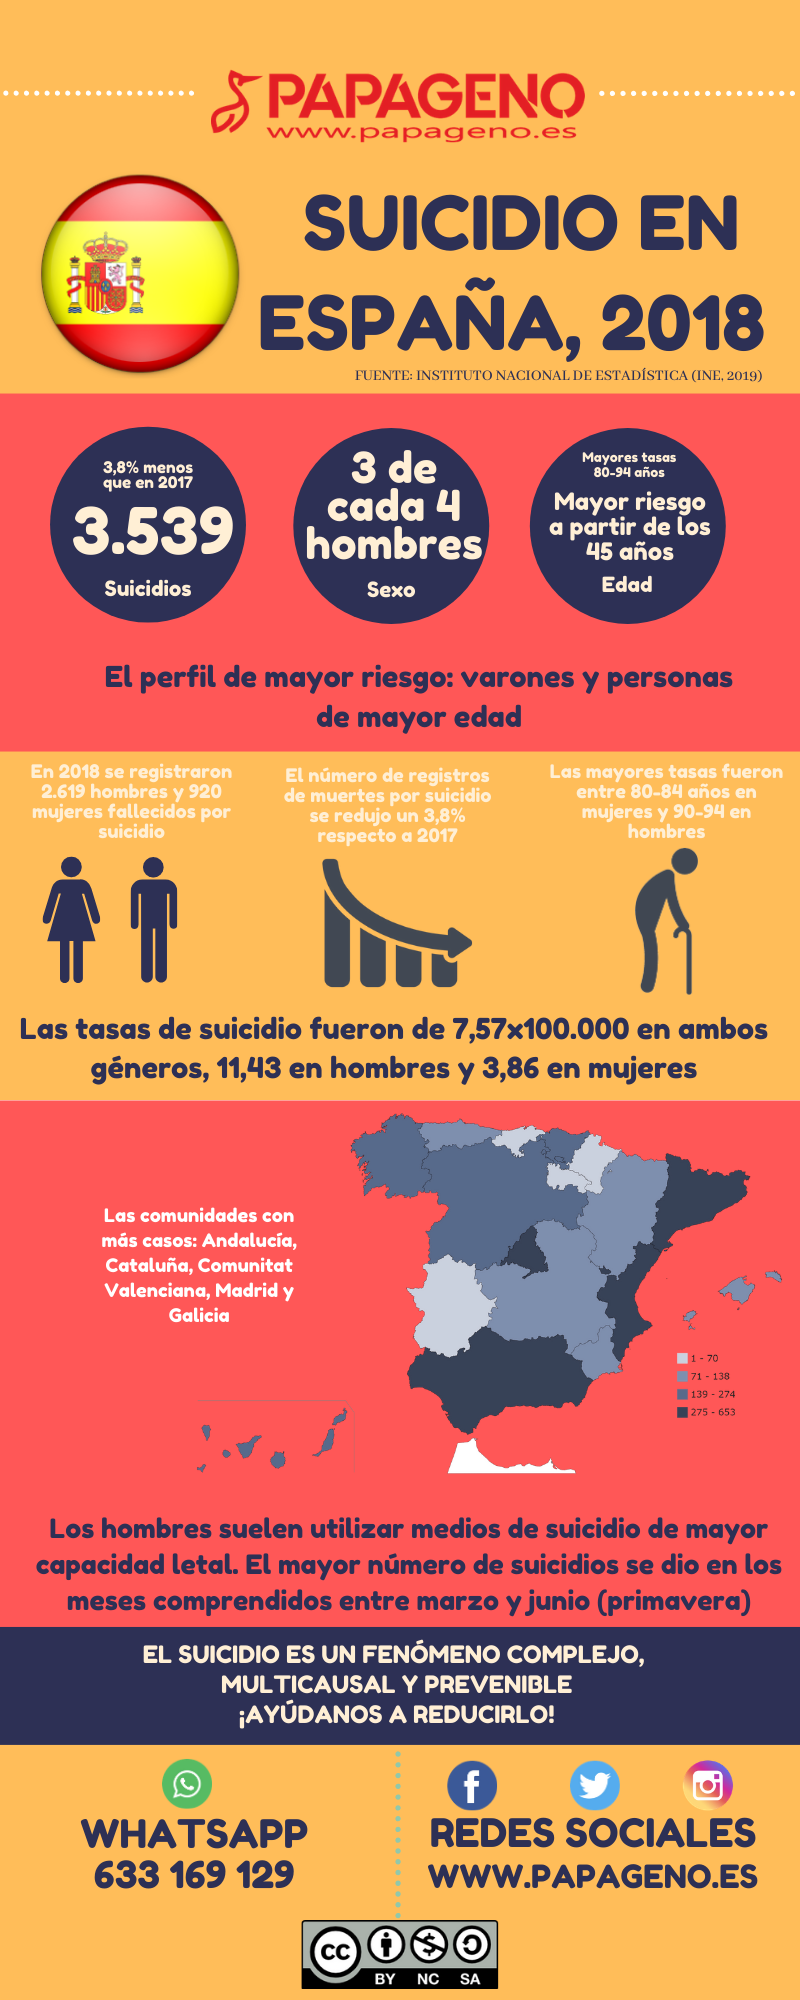 Suicidio en España, 2018